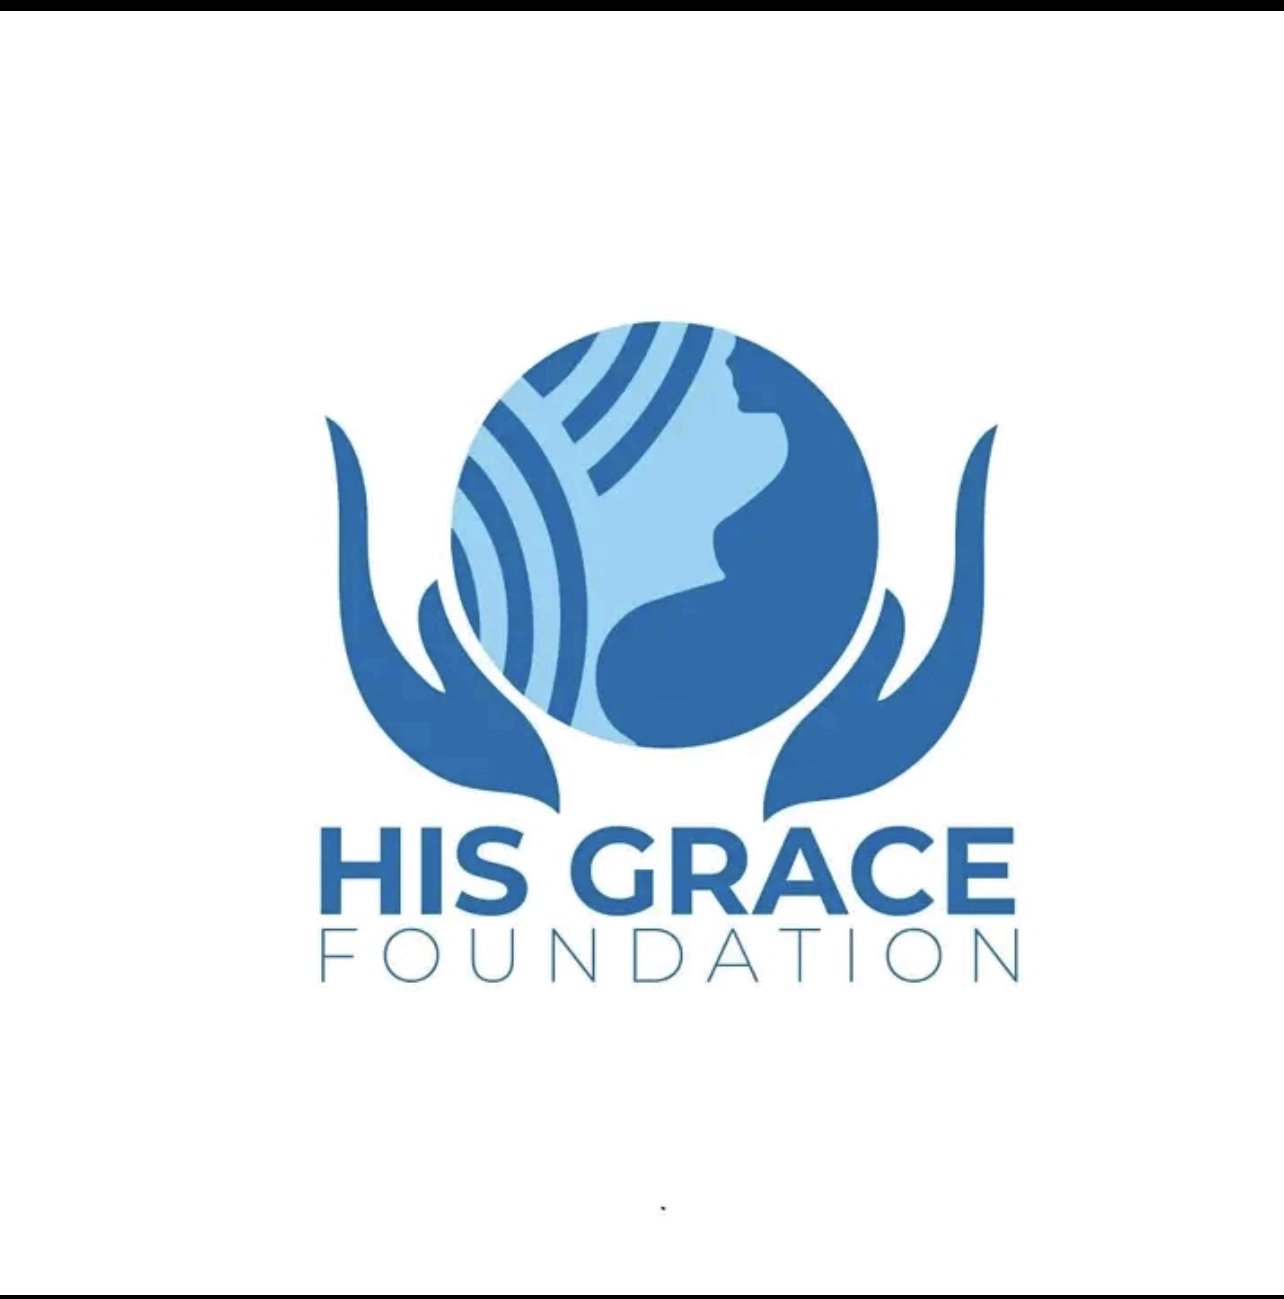 His grace Foundation logo